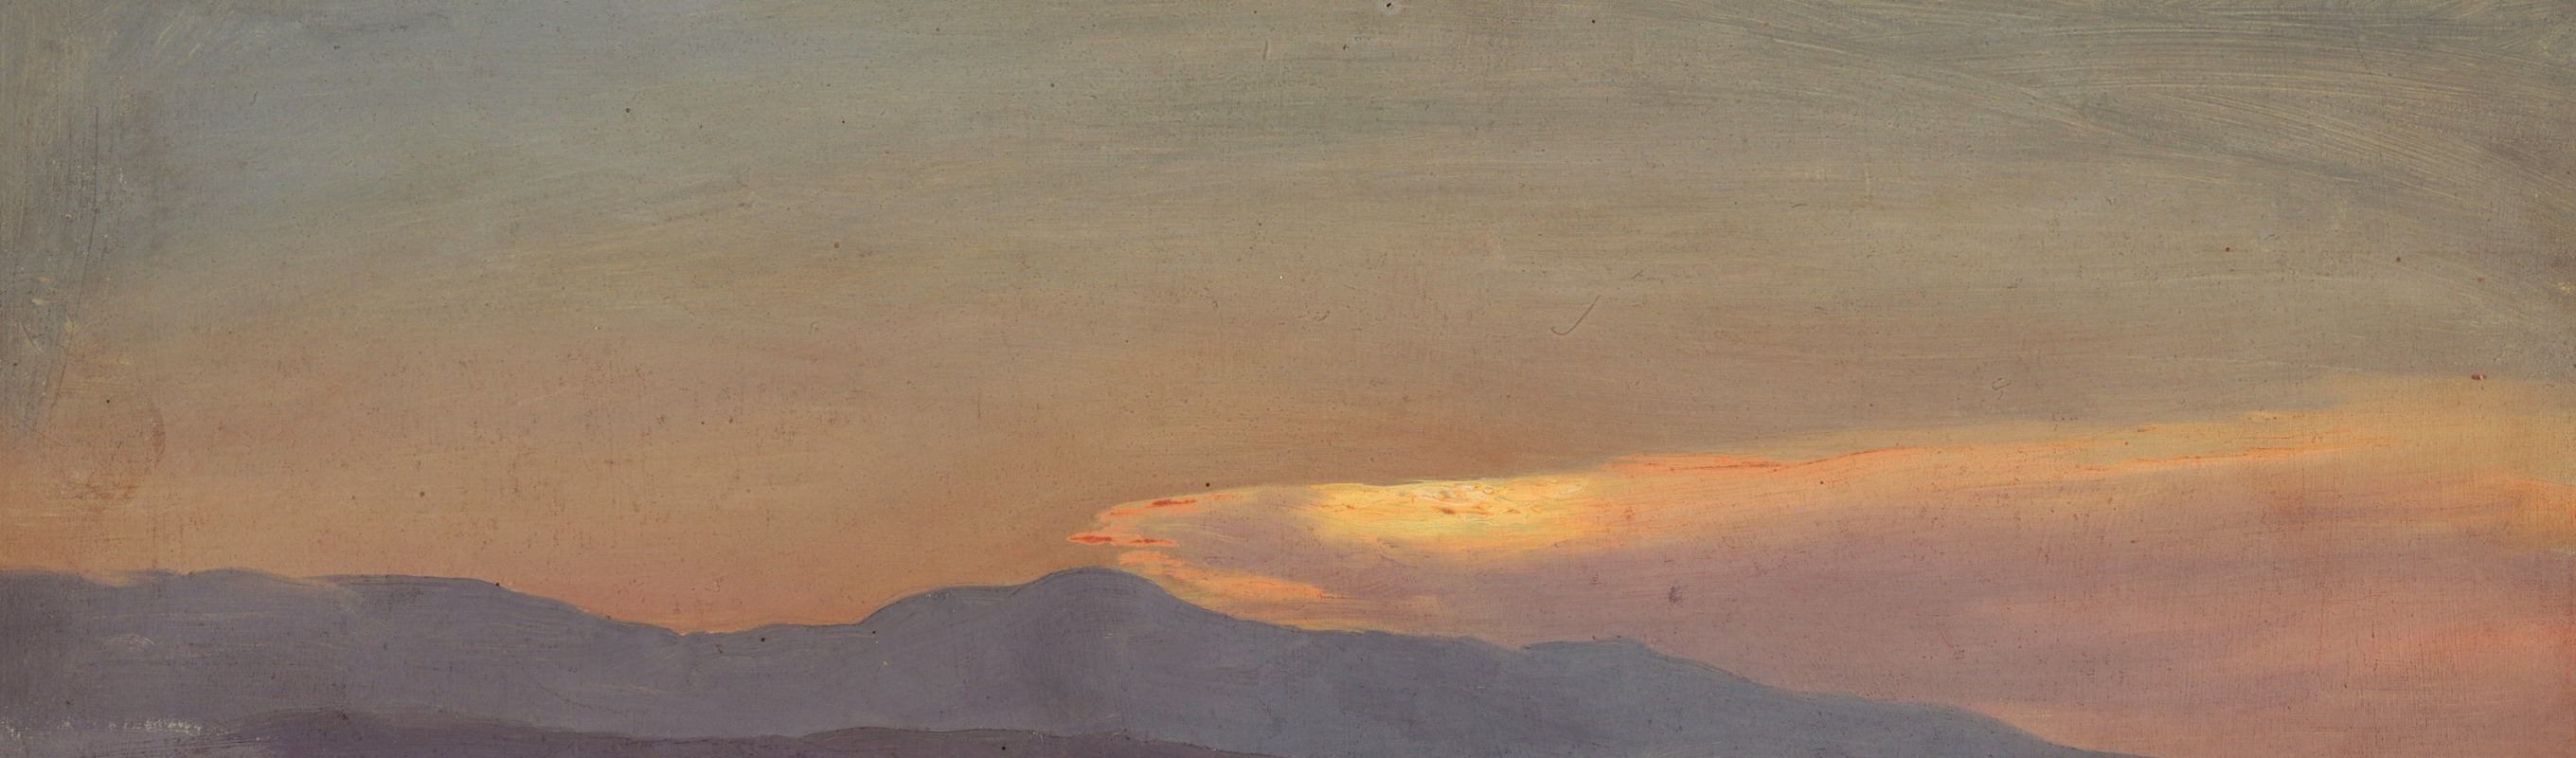 Frederic Edwin Church - Sunset cloud study